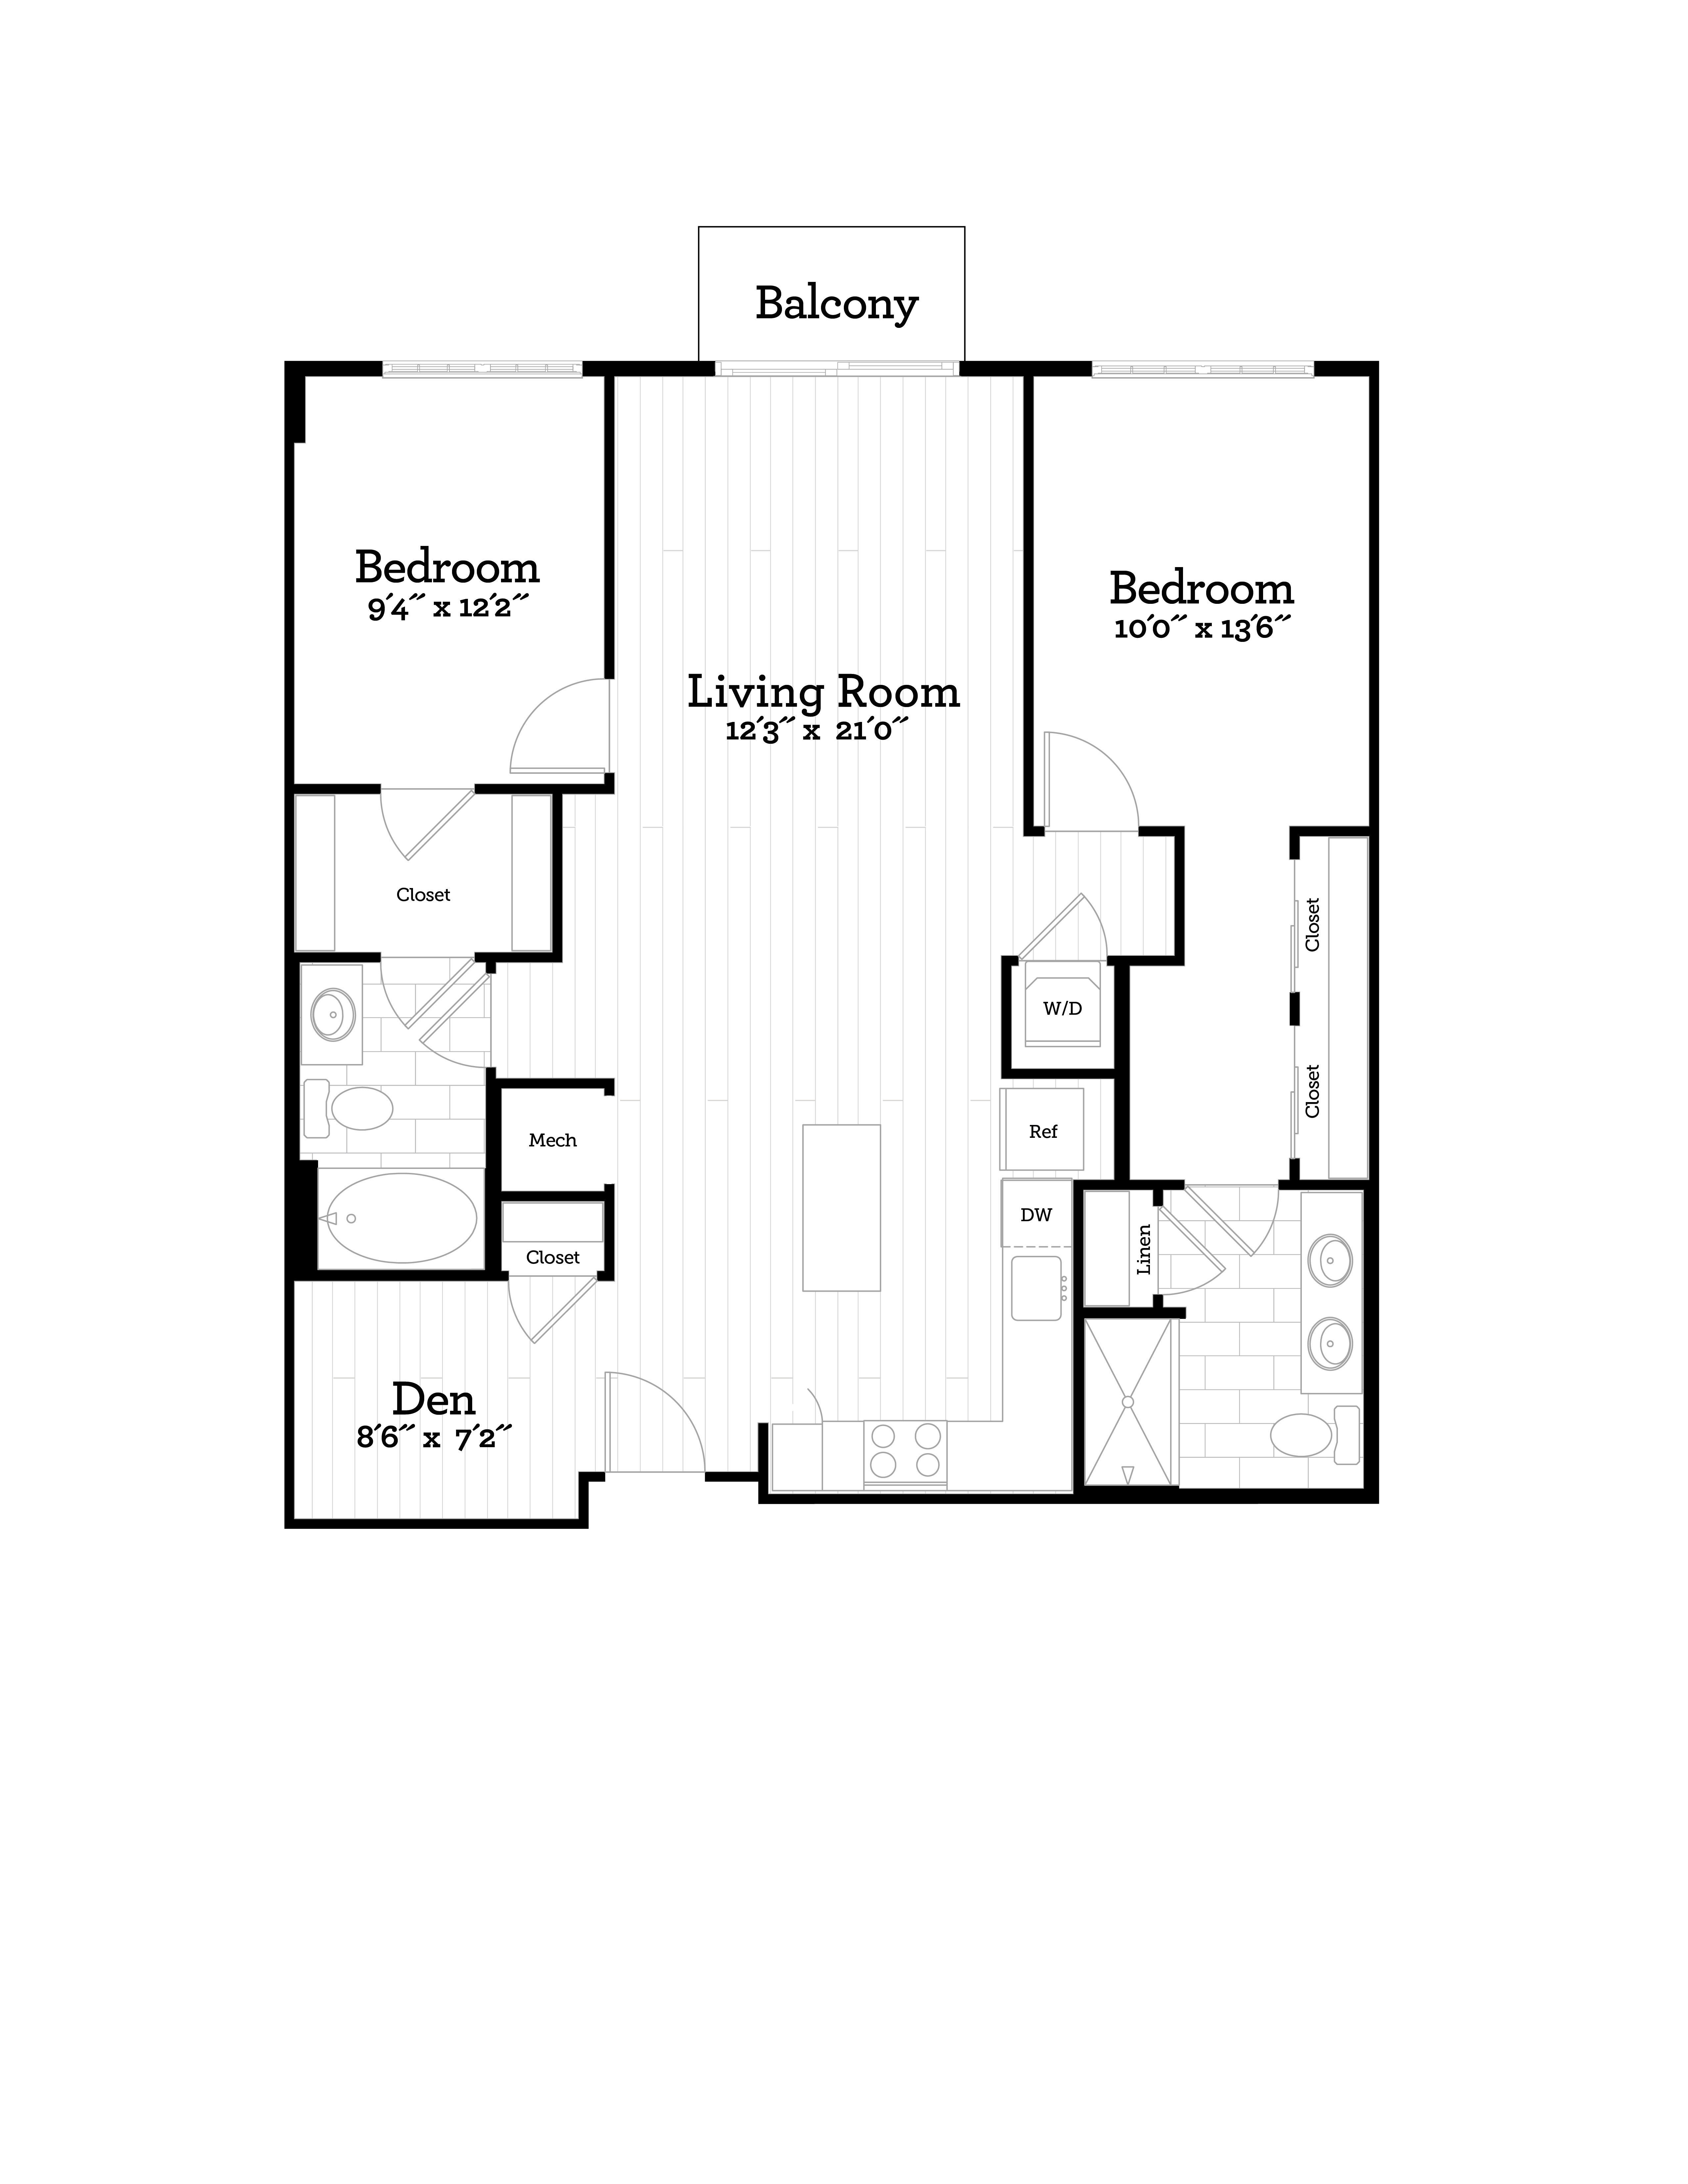 Apartment 240 floorplan